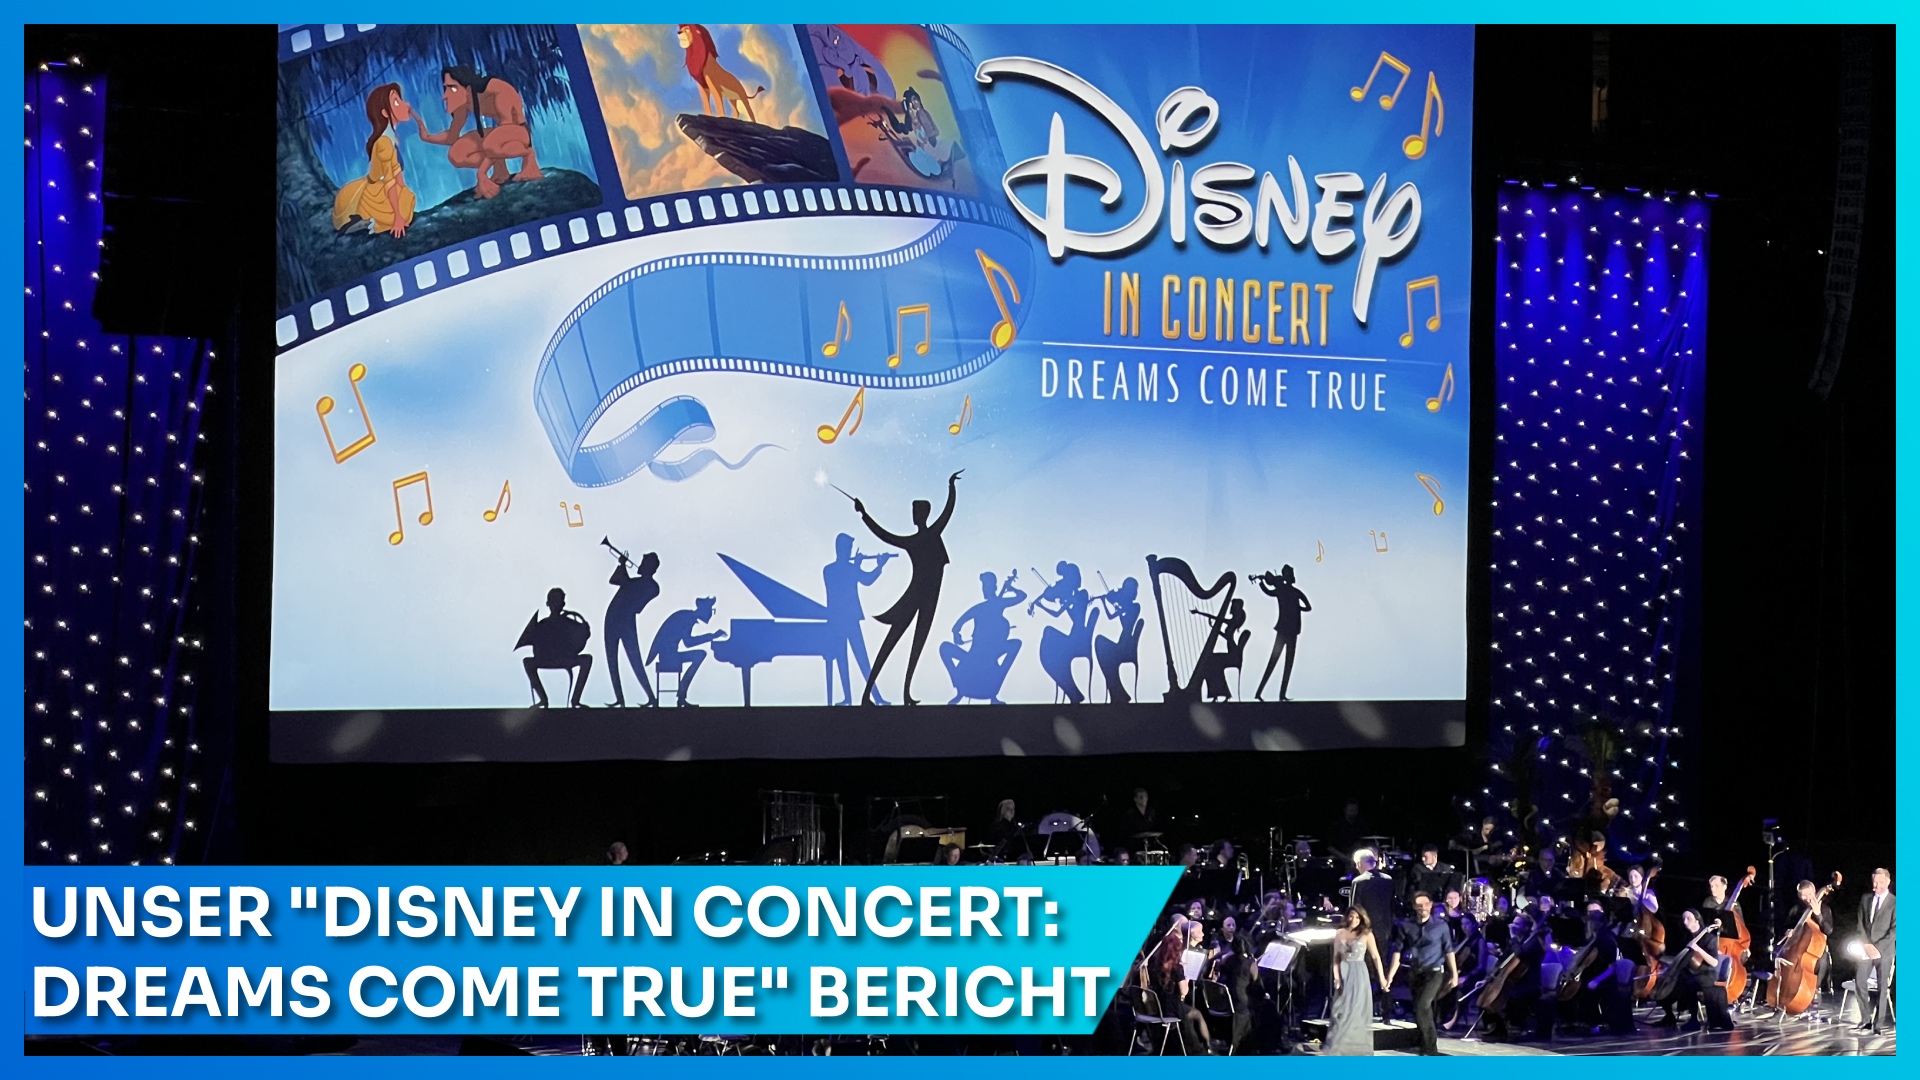 Disney in Concert Dreams Come True Bericht